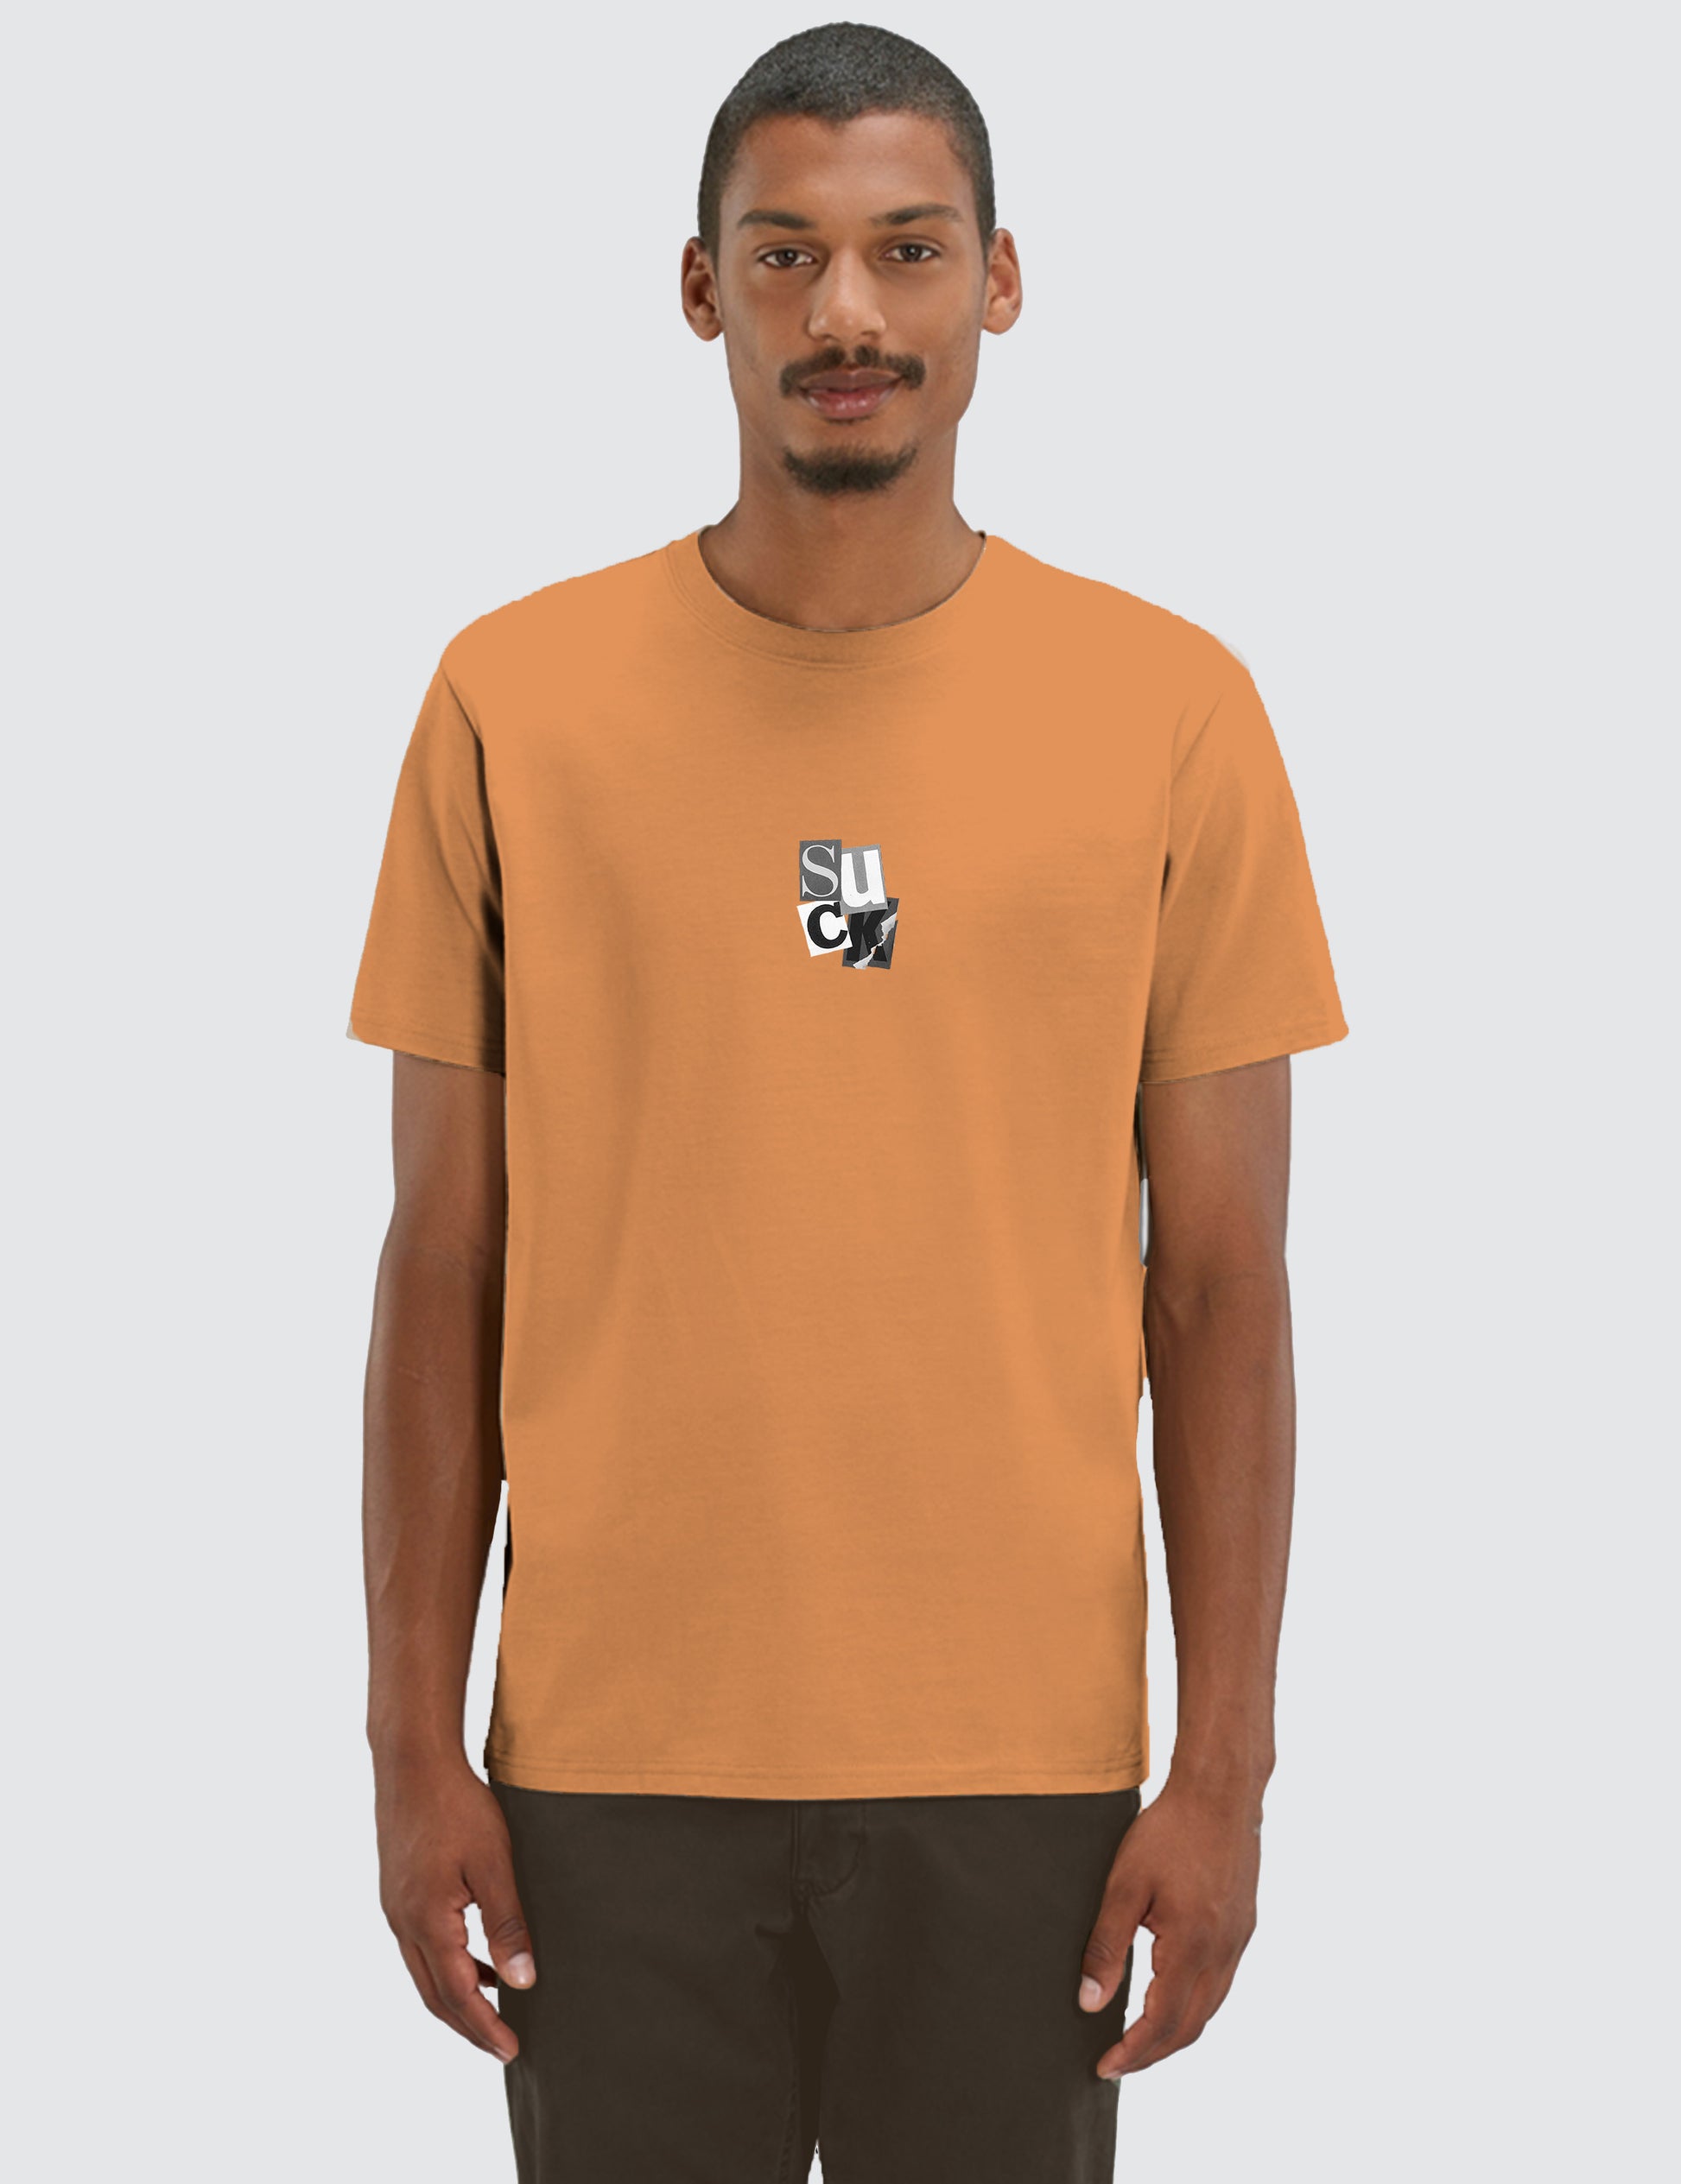 Botanical T-shirt (Tangerine)